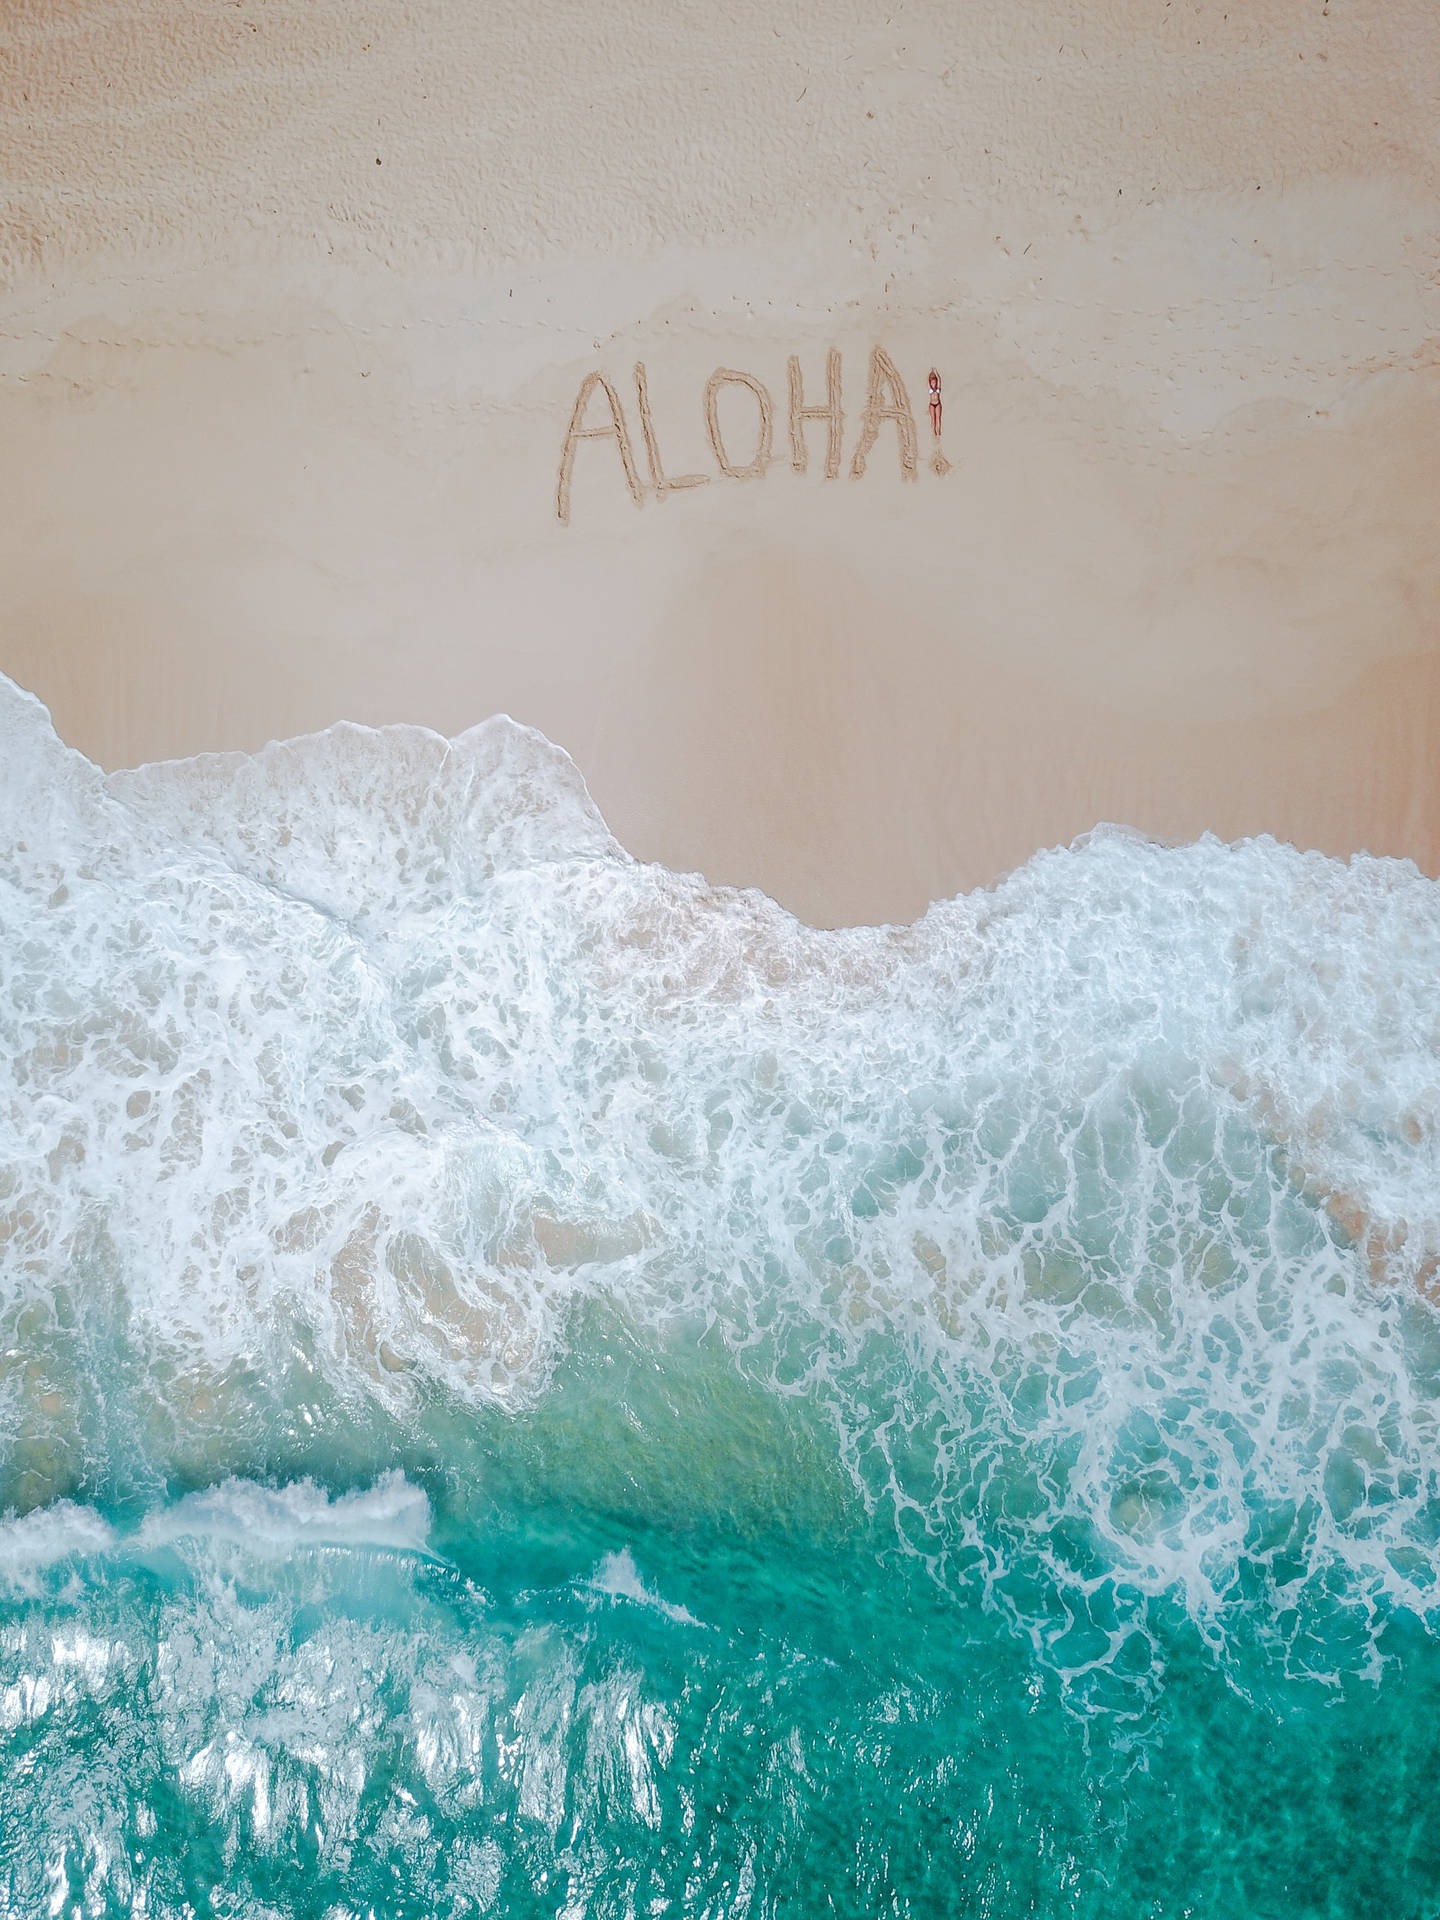 4k Ultra Hd Strand Aloha Wallpaper